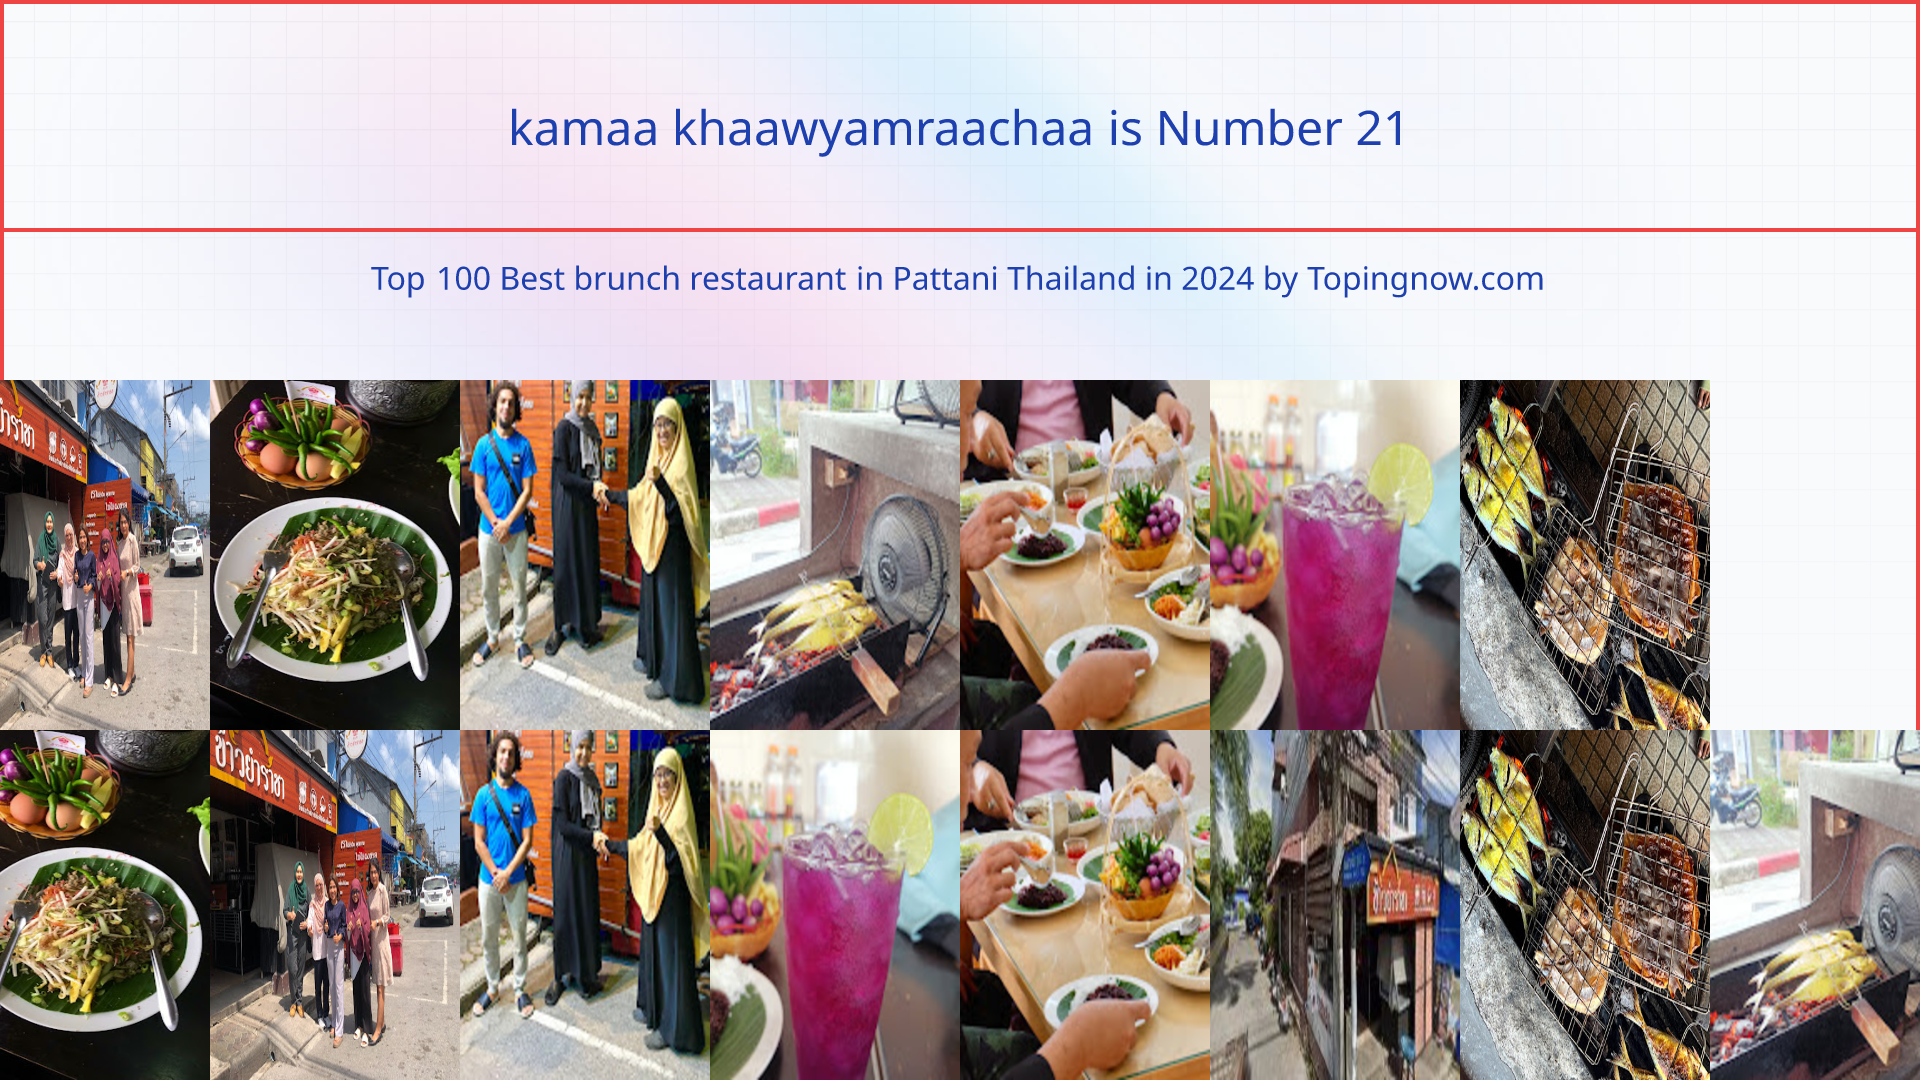 kamaa khaawyamraachaa: Top 100 Best brunch restaurant in Pattani Thailand in 2024